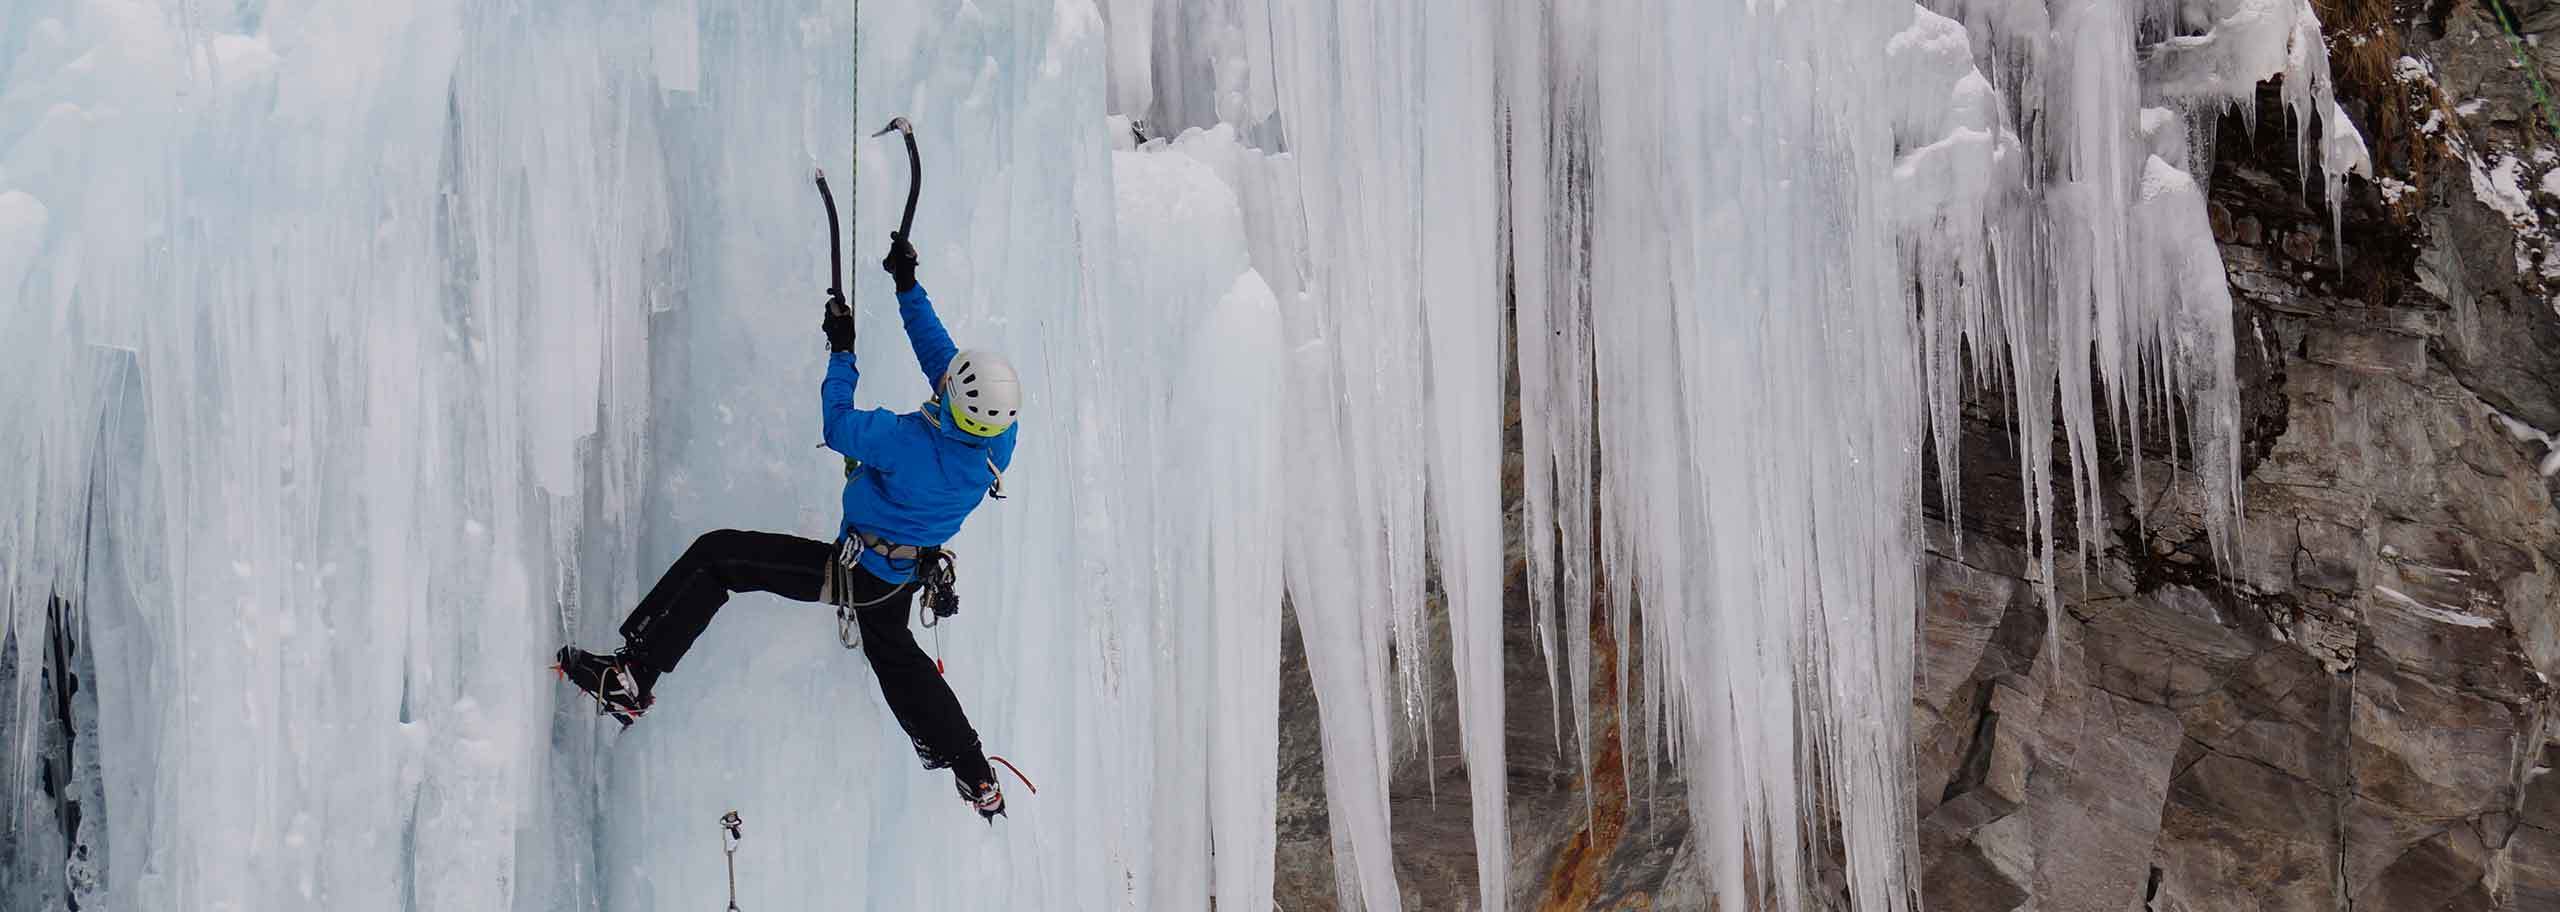 Gran Paradiso Ice Climbing Guided Experience